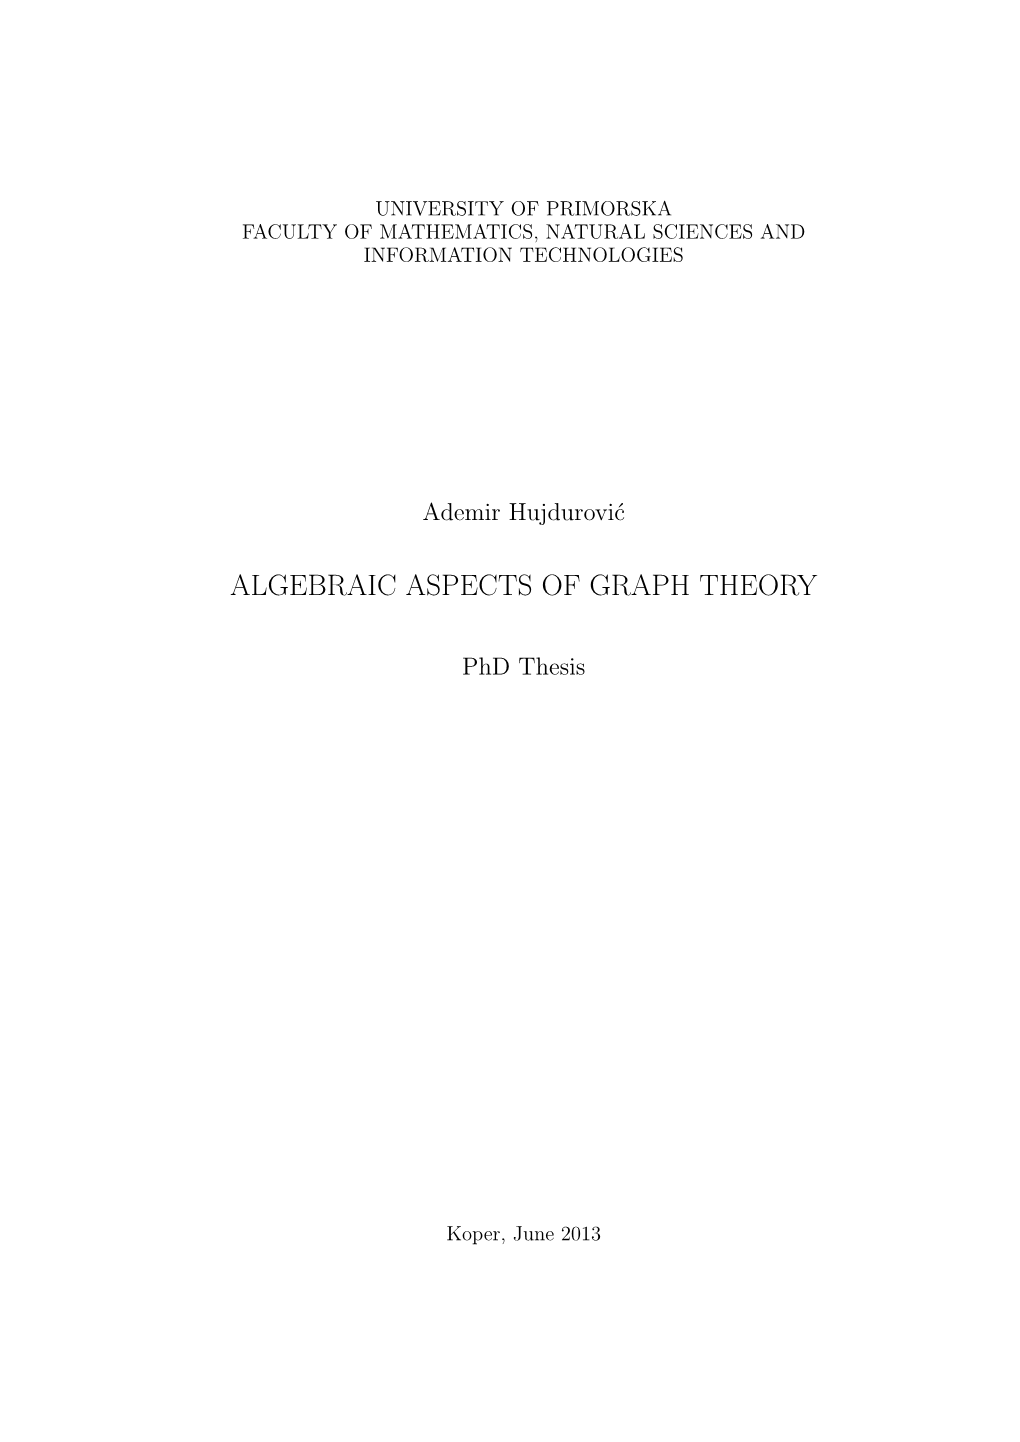 Algebraic Aspects of Graph Theory